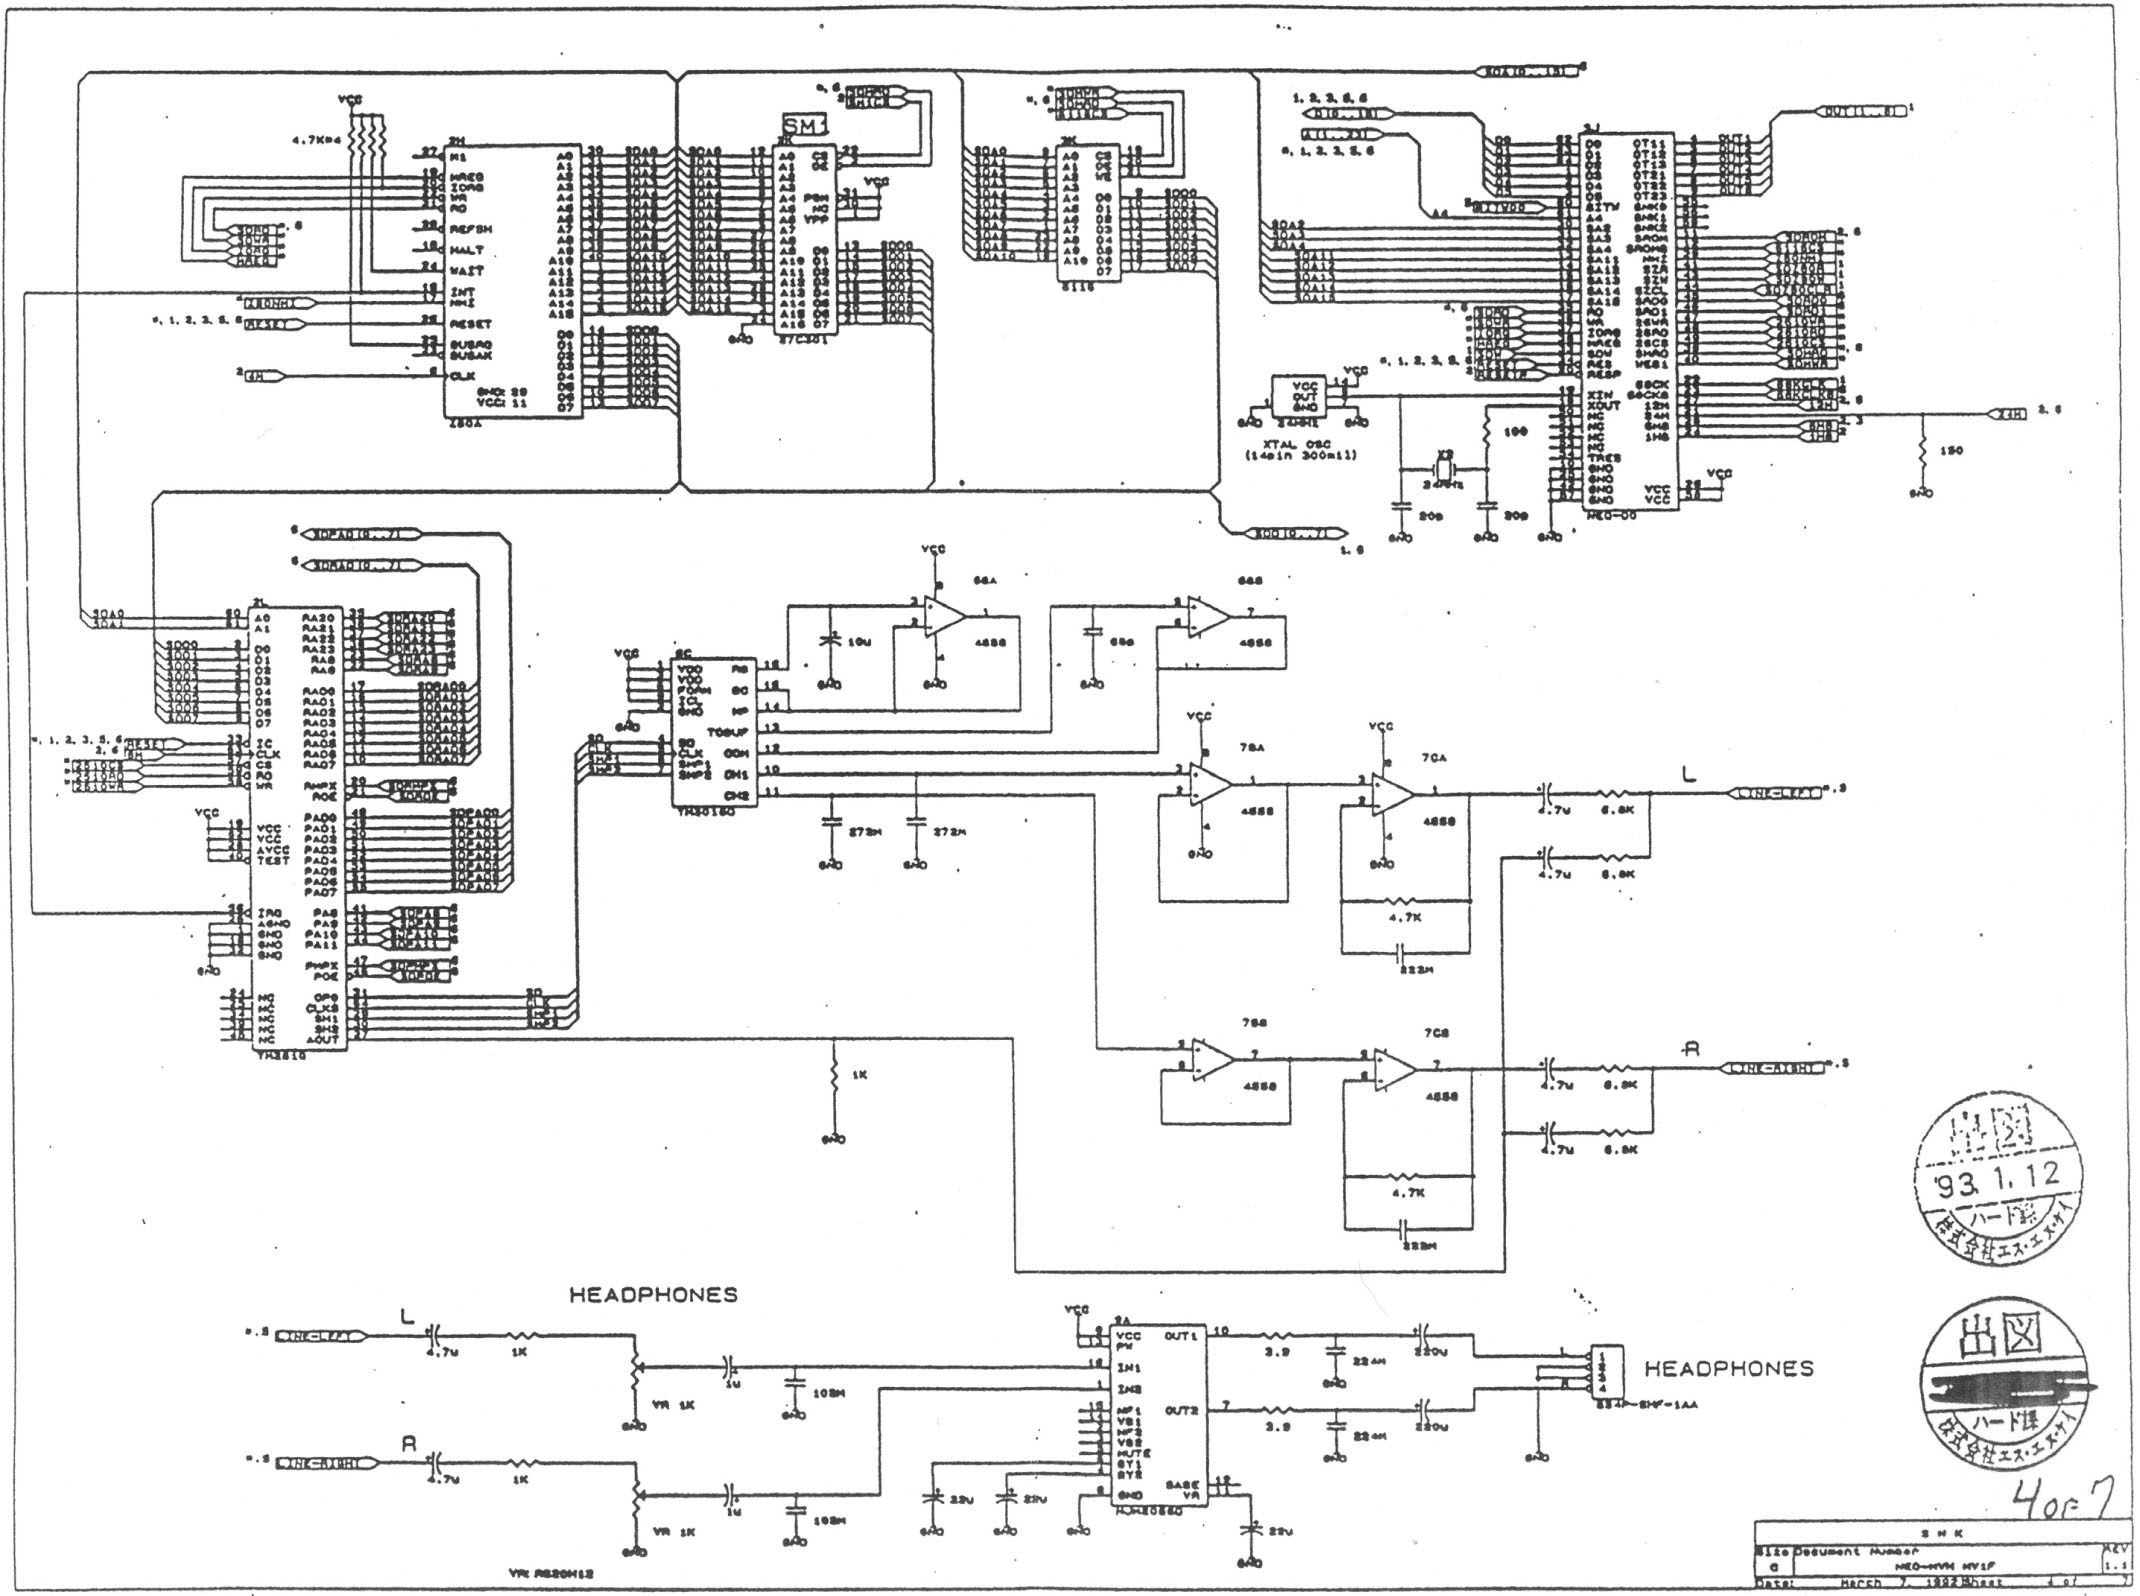 Neo Diagnostics BIOS + M1 pour tester mon slot Z80 error Mv1fs-page4